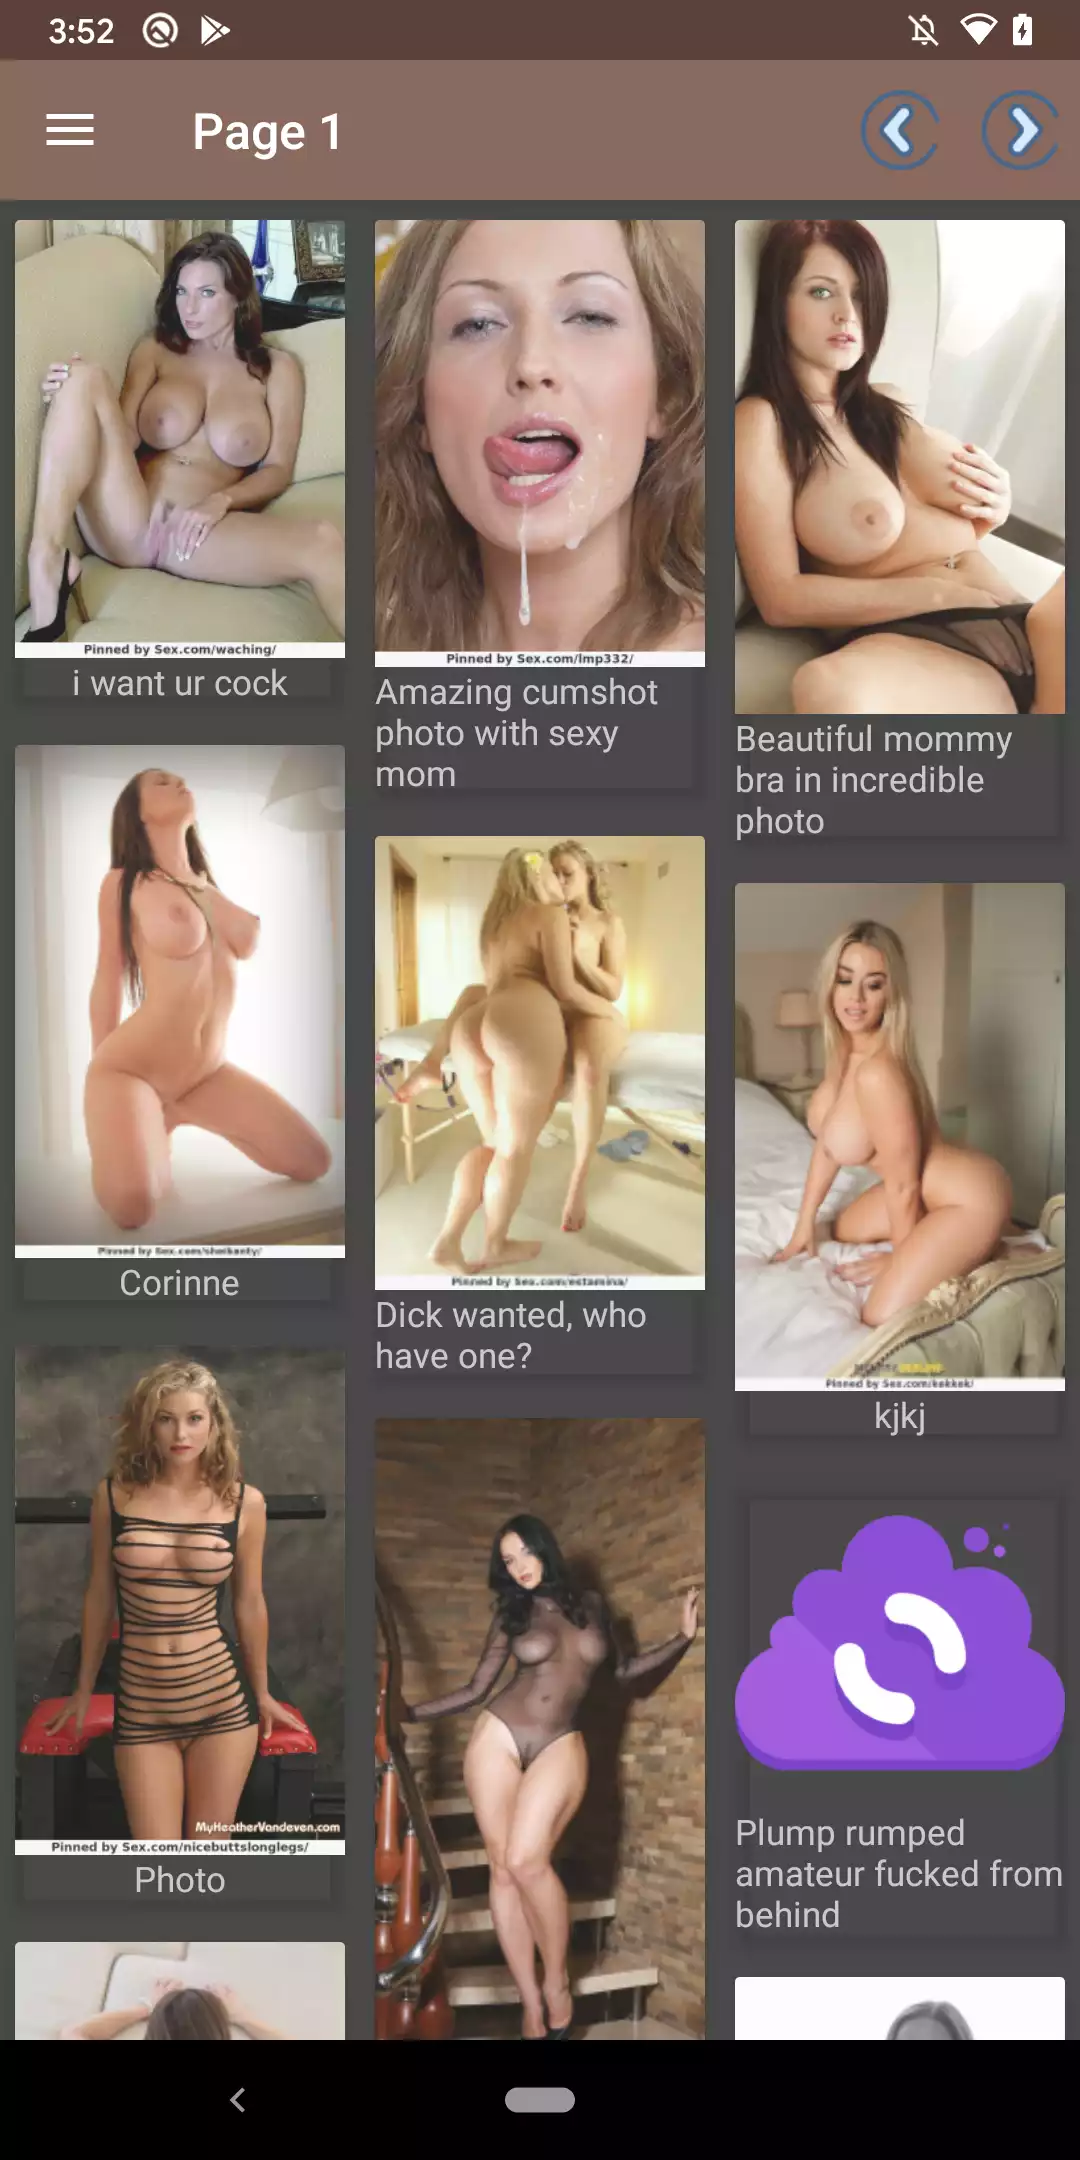 Hot Milf Pics gallery,sexy,galleries,downloading,sexygalleries,hentaipics,ann,josie,milf,lisa,photo,app,hentai,photos,download,porn,apps,hot,series,jagger